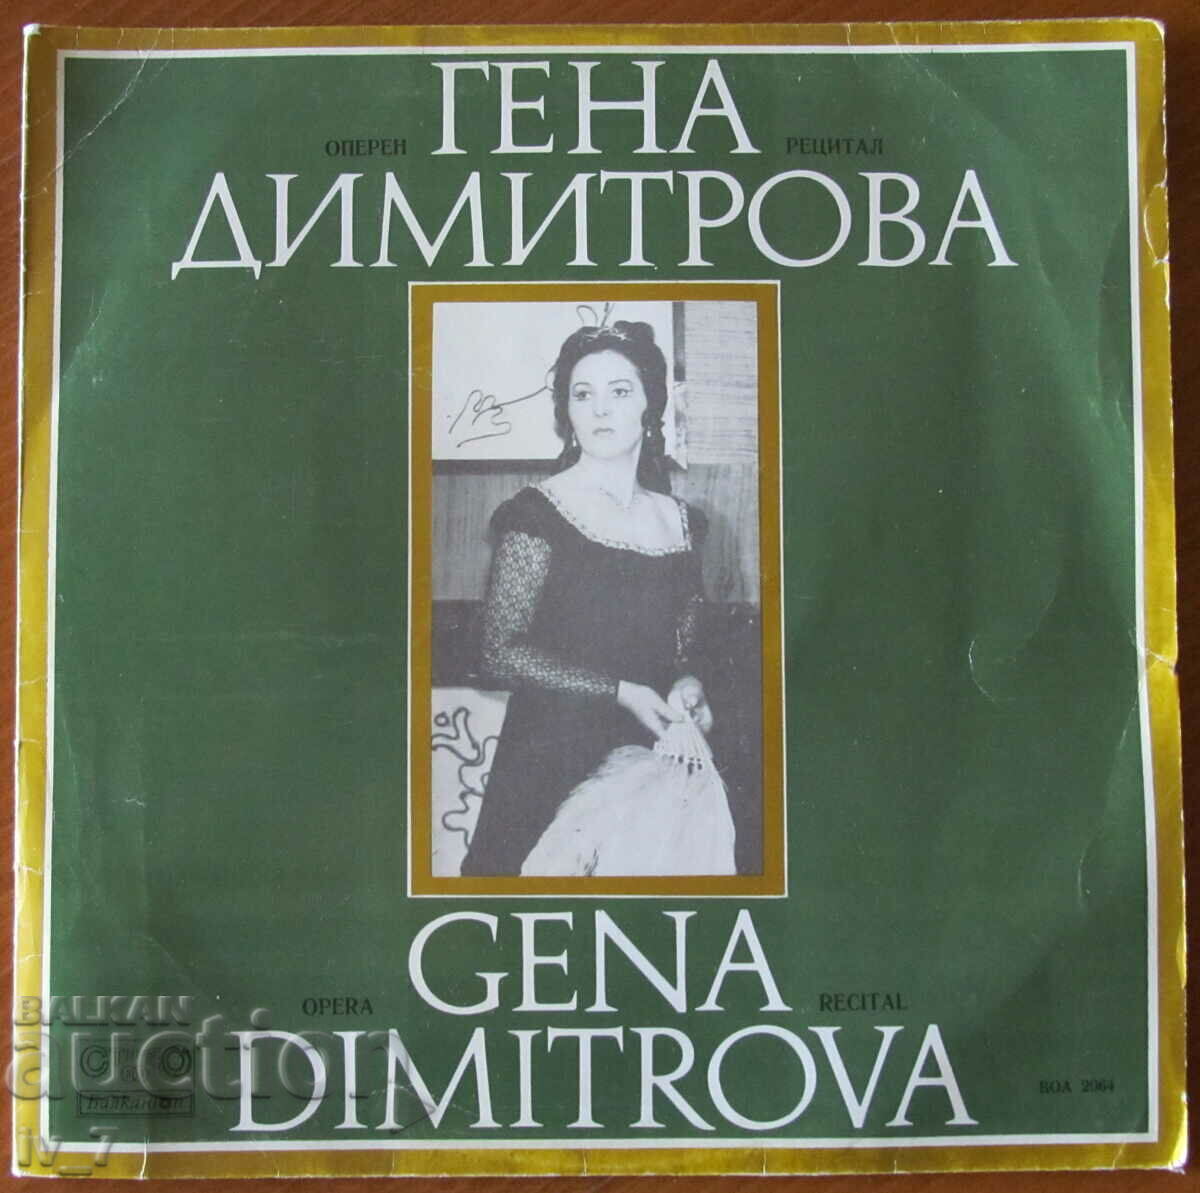 RECORD - GENA DIMITROVA, large format